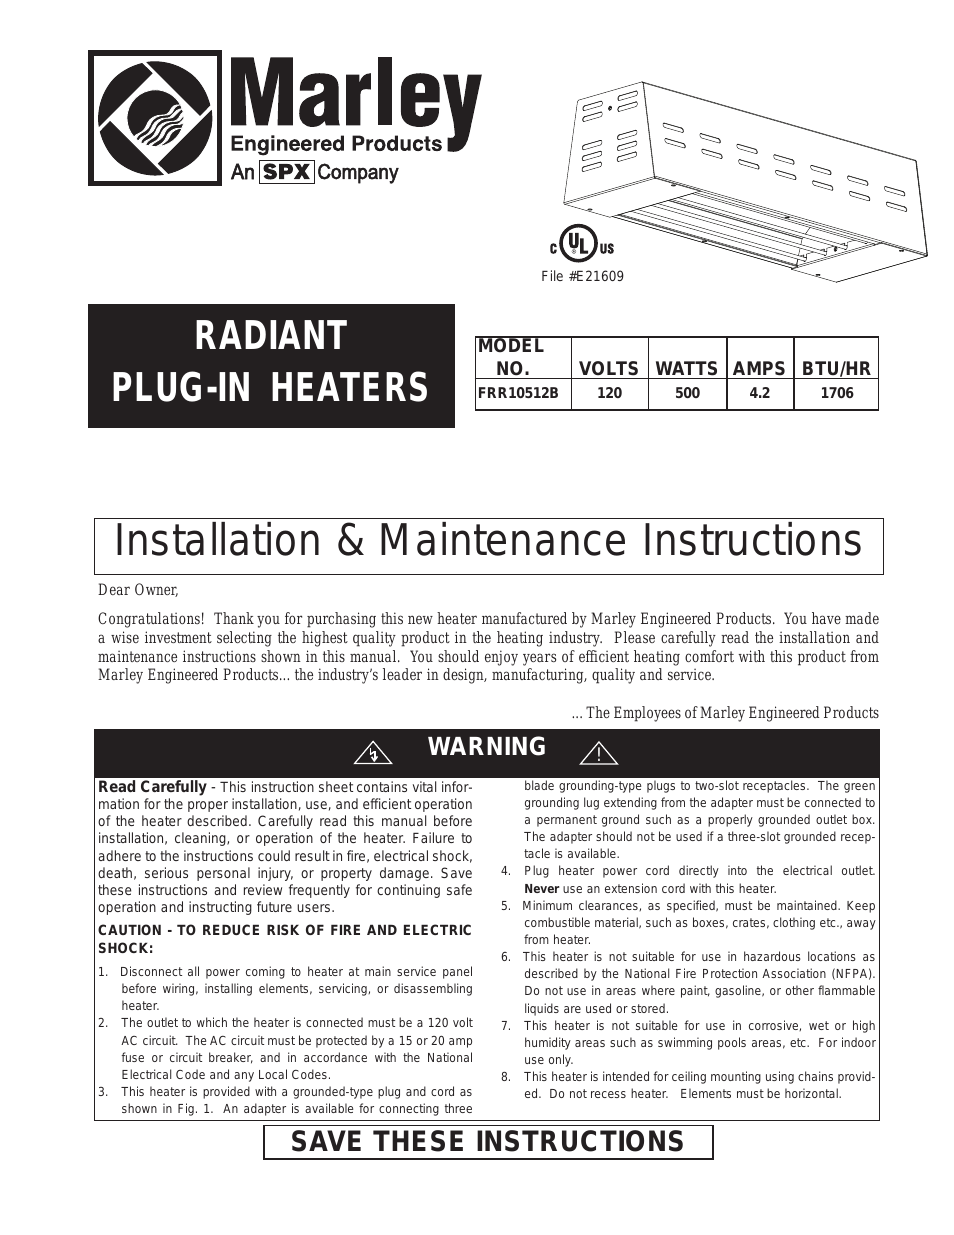 Radiant Plug-in Heaters FRR10512B